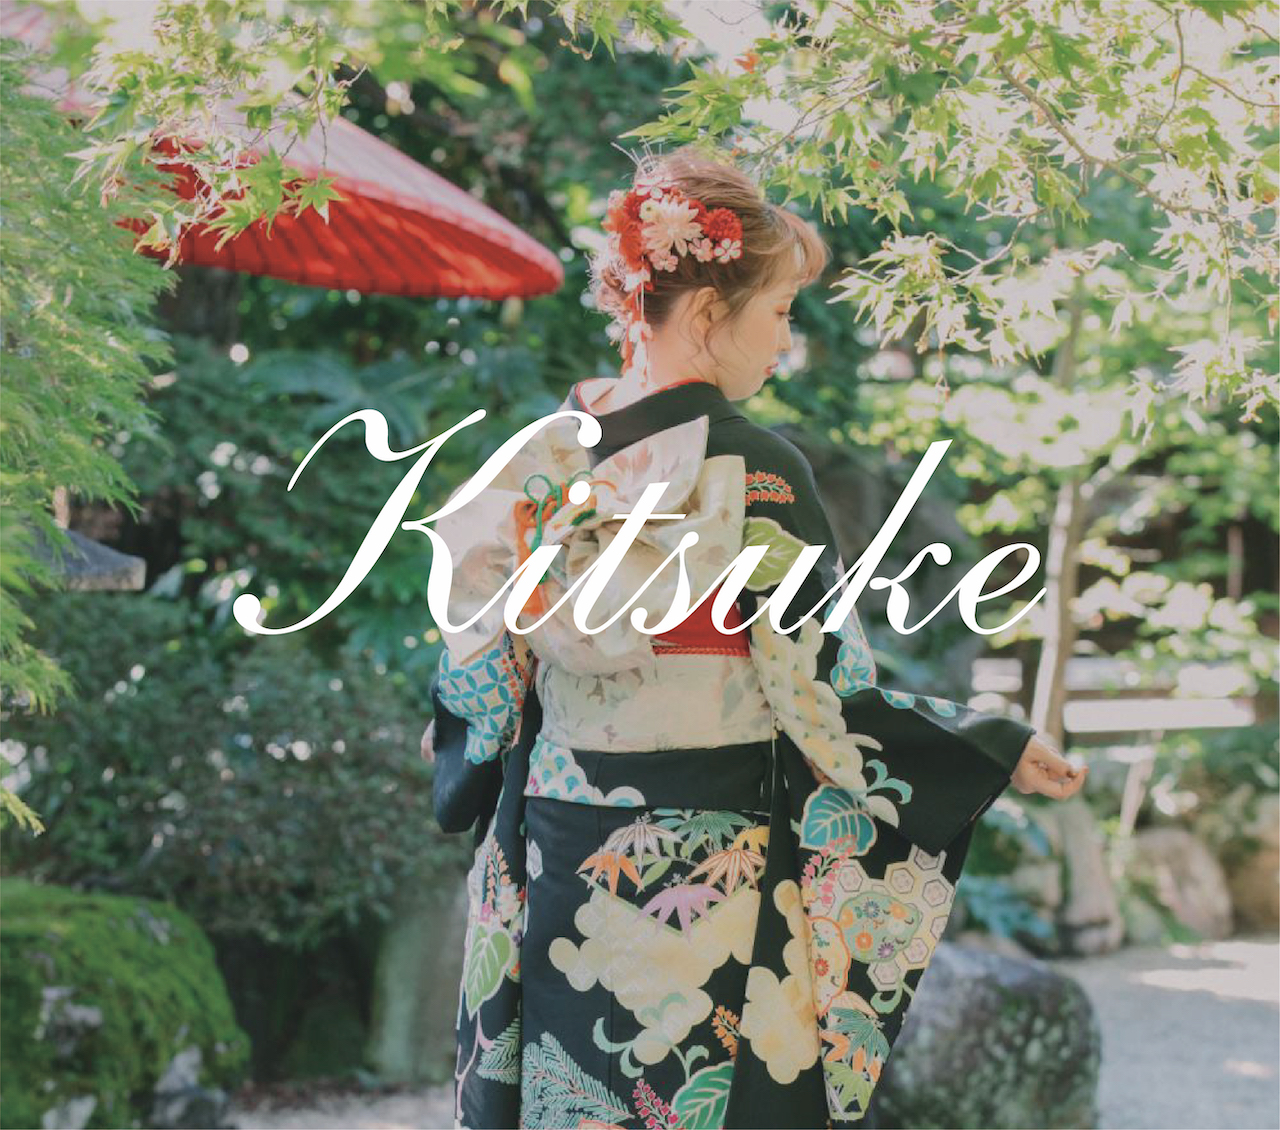 Kitsuke